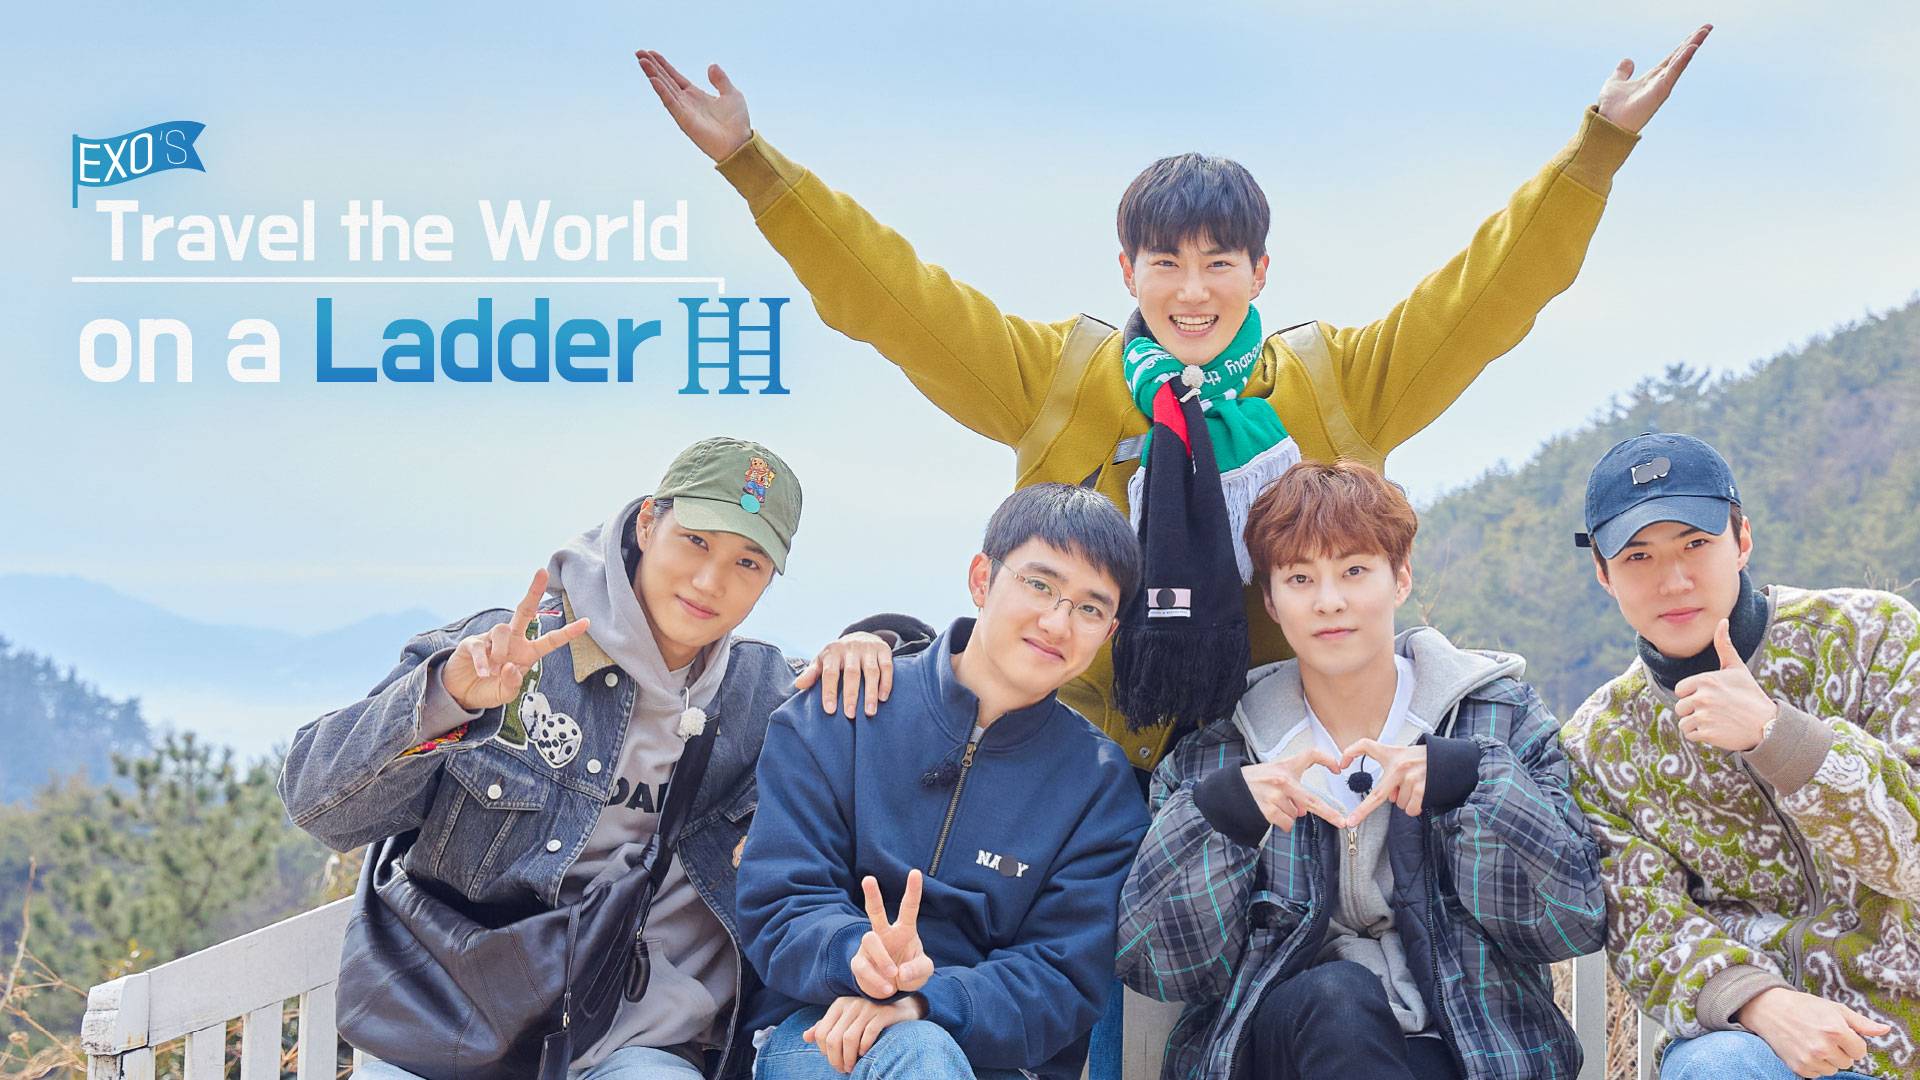 travel the world on exo's ladder season 4 episode 3